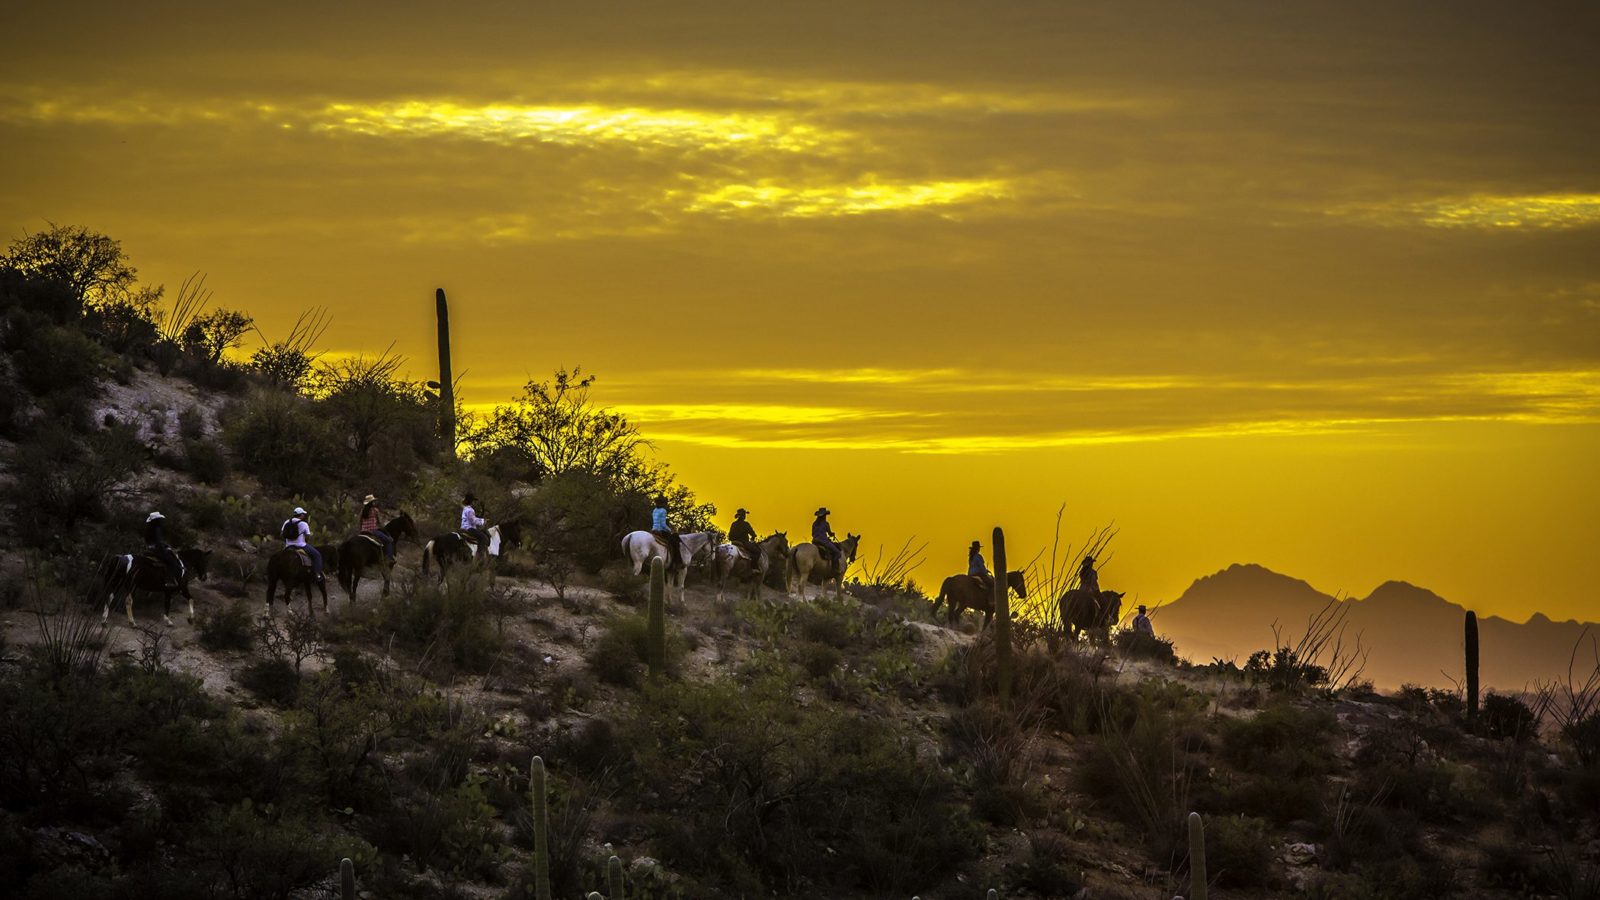 Sunset horseback ride through desert around Tanque Verde, an Arizona dude ranch